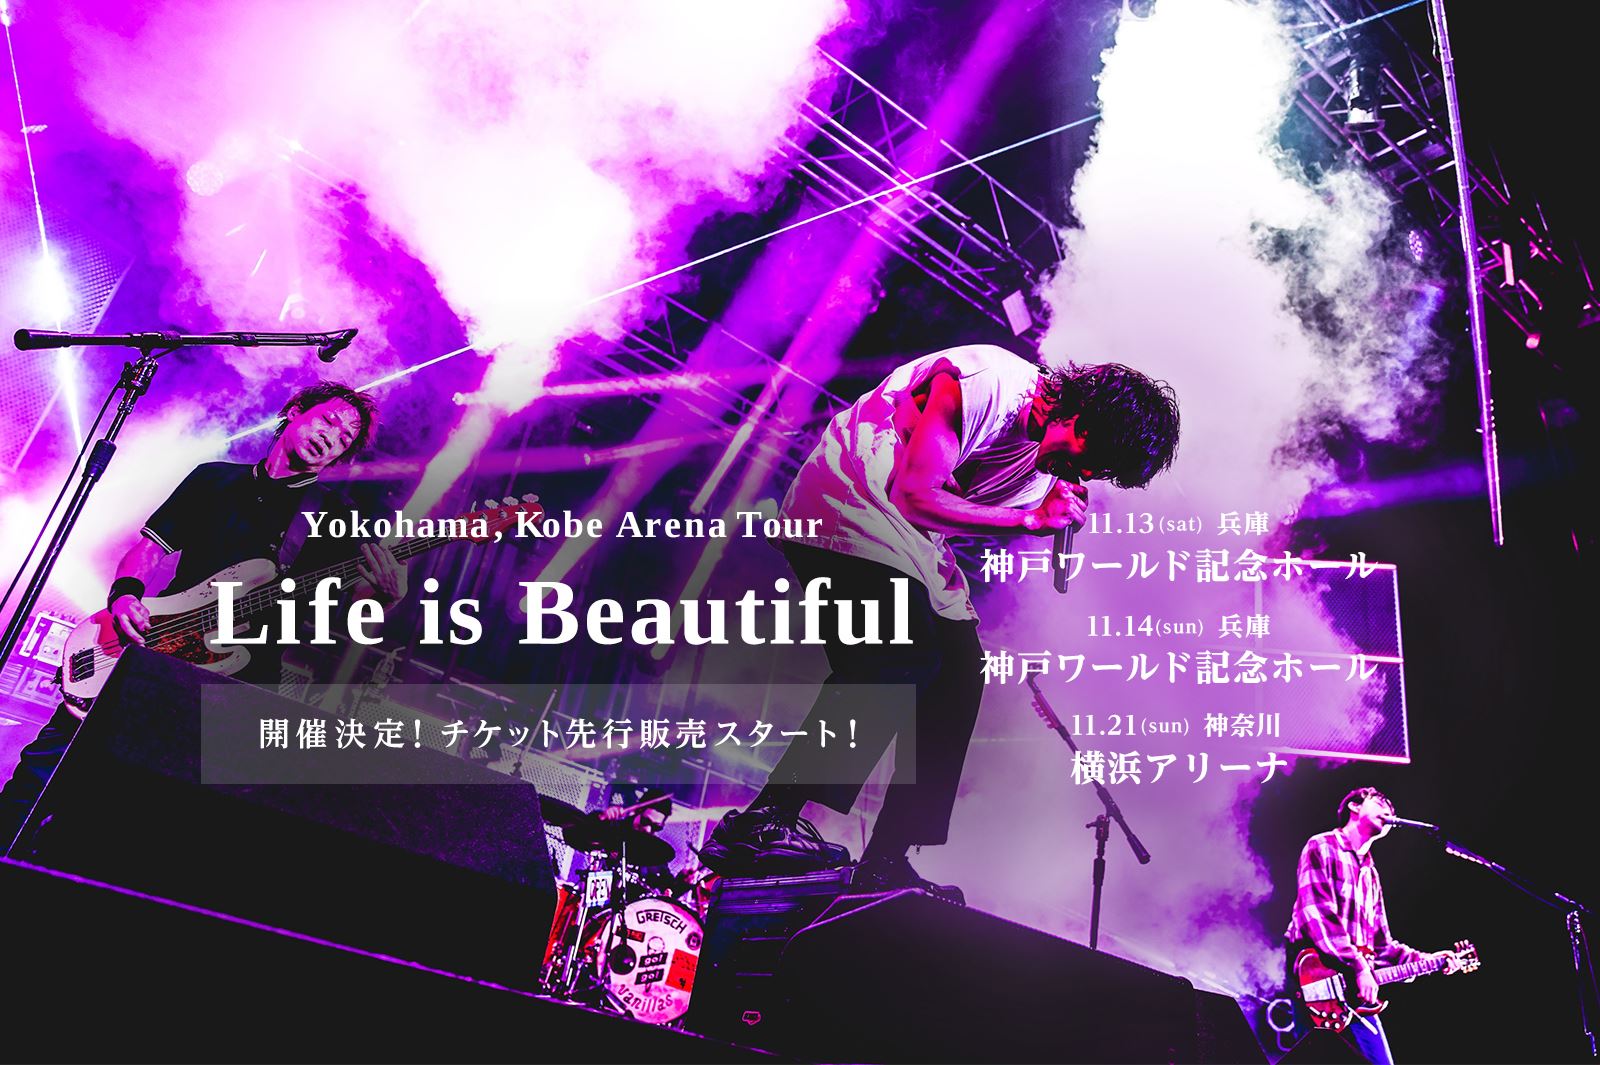 『Yokohama, Kobe Arena Tour 「Life is Beautiful」』告知画像